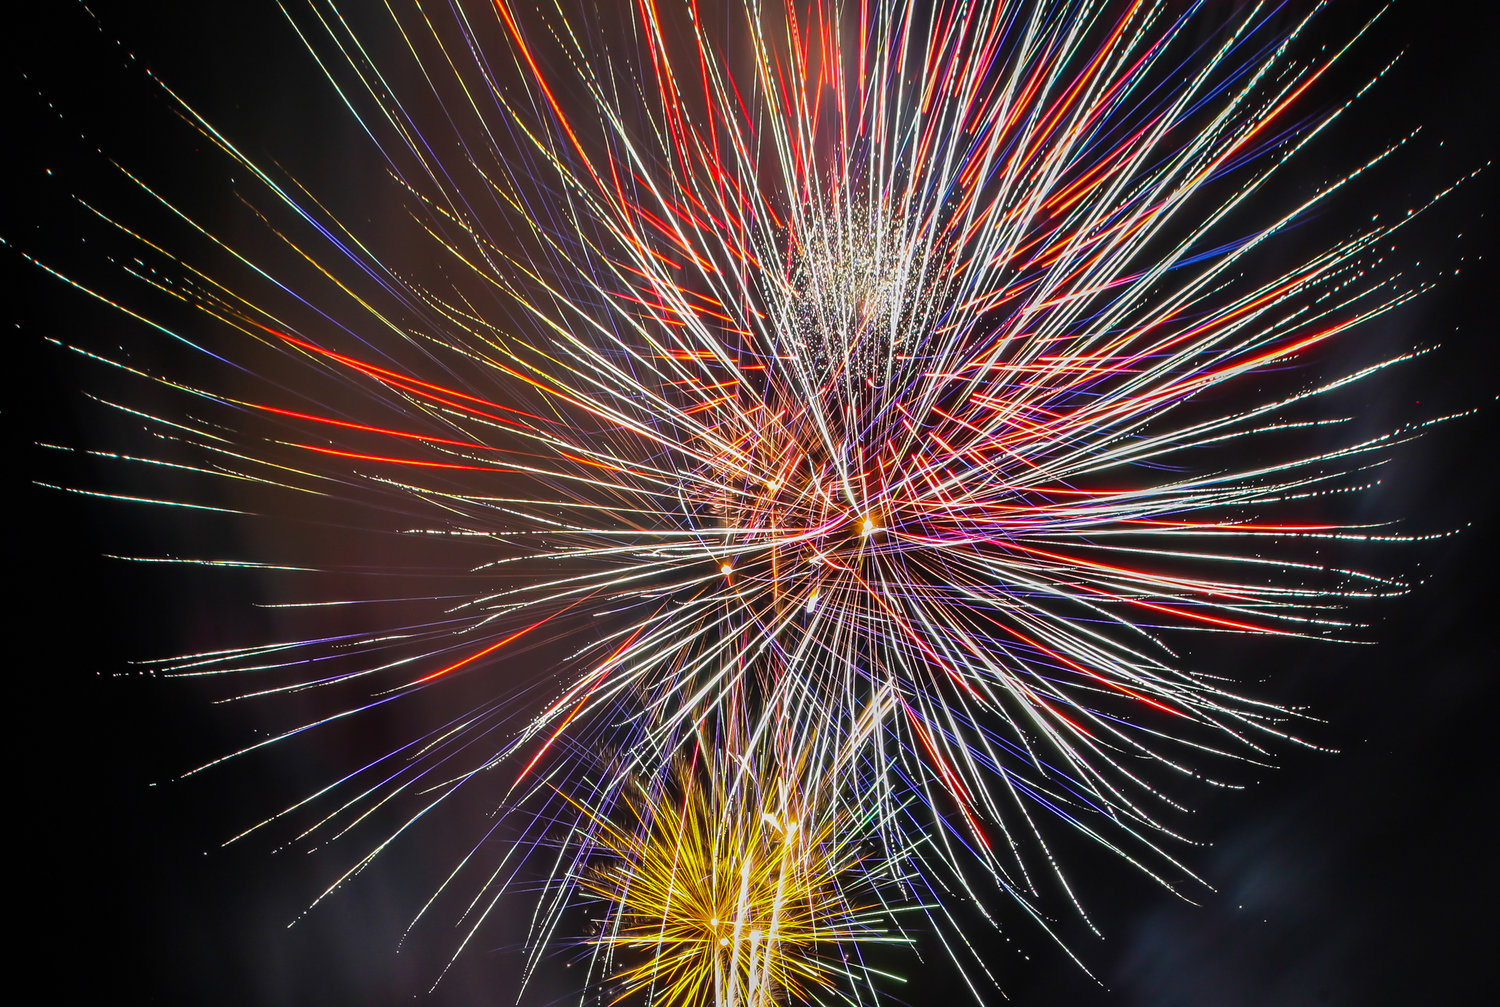 Blair company runs Fourth of July fireworks display Washington County